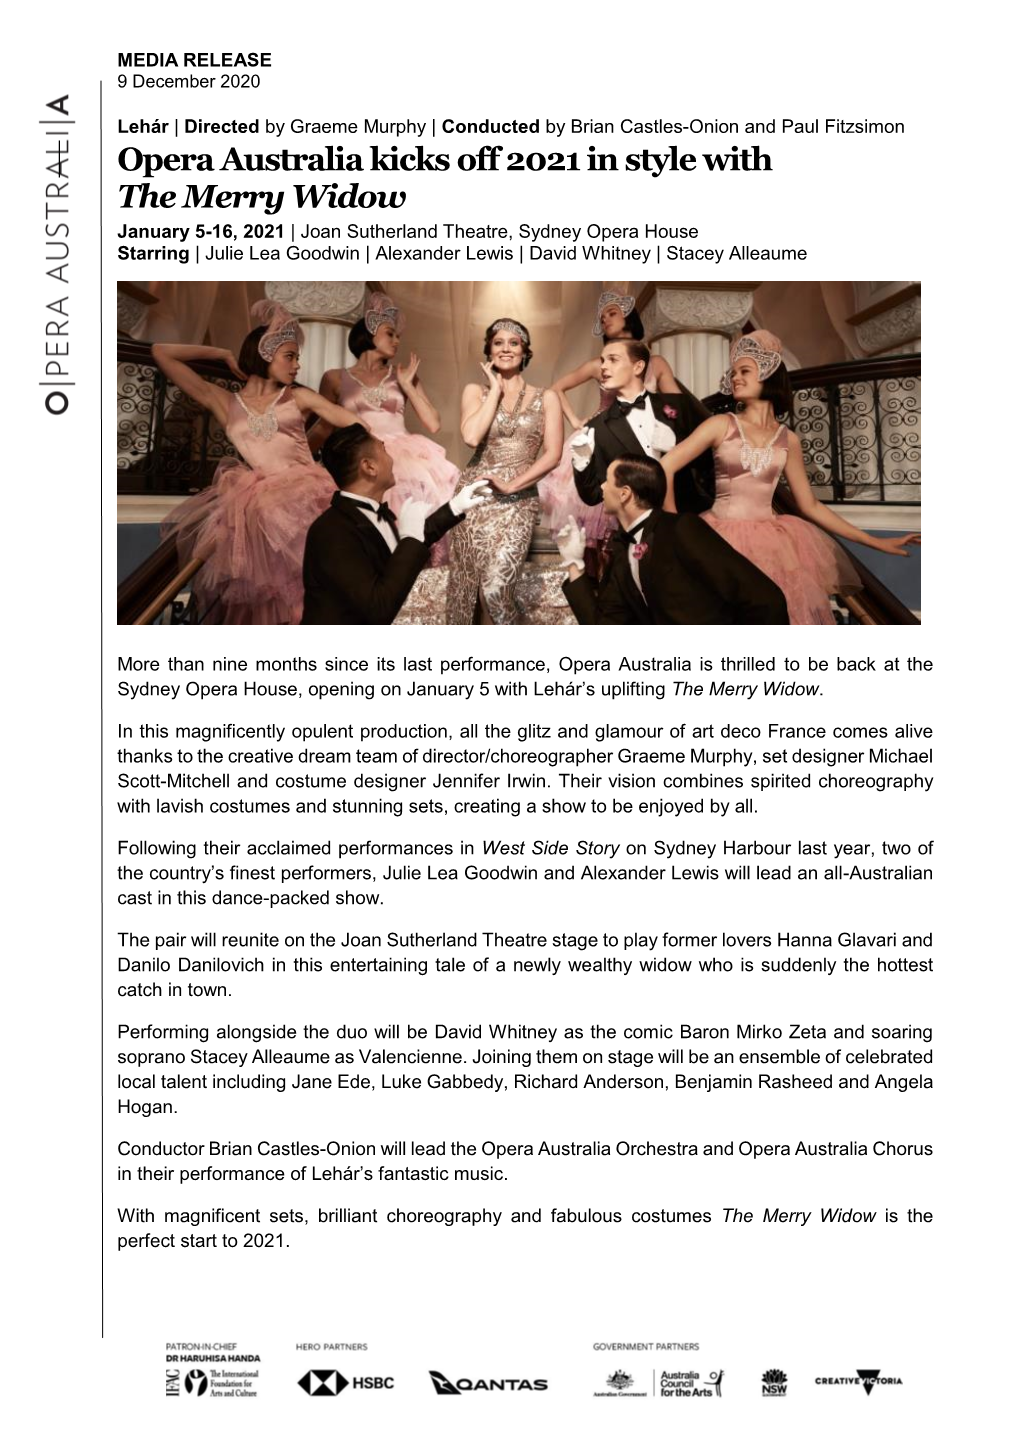 Opera Australia Kicks Off 2021 in Style with the Merry Widow